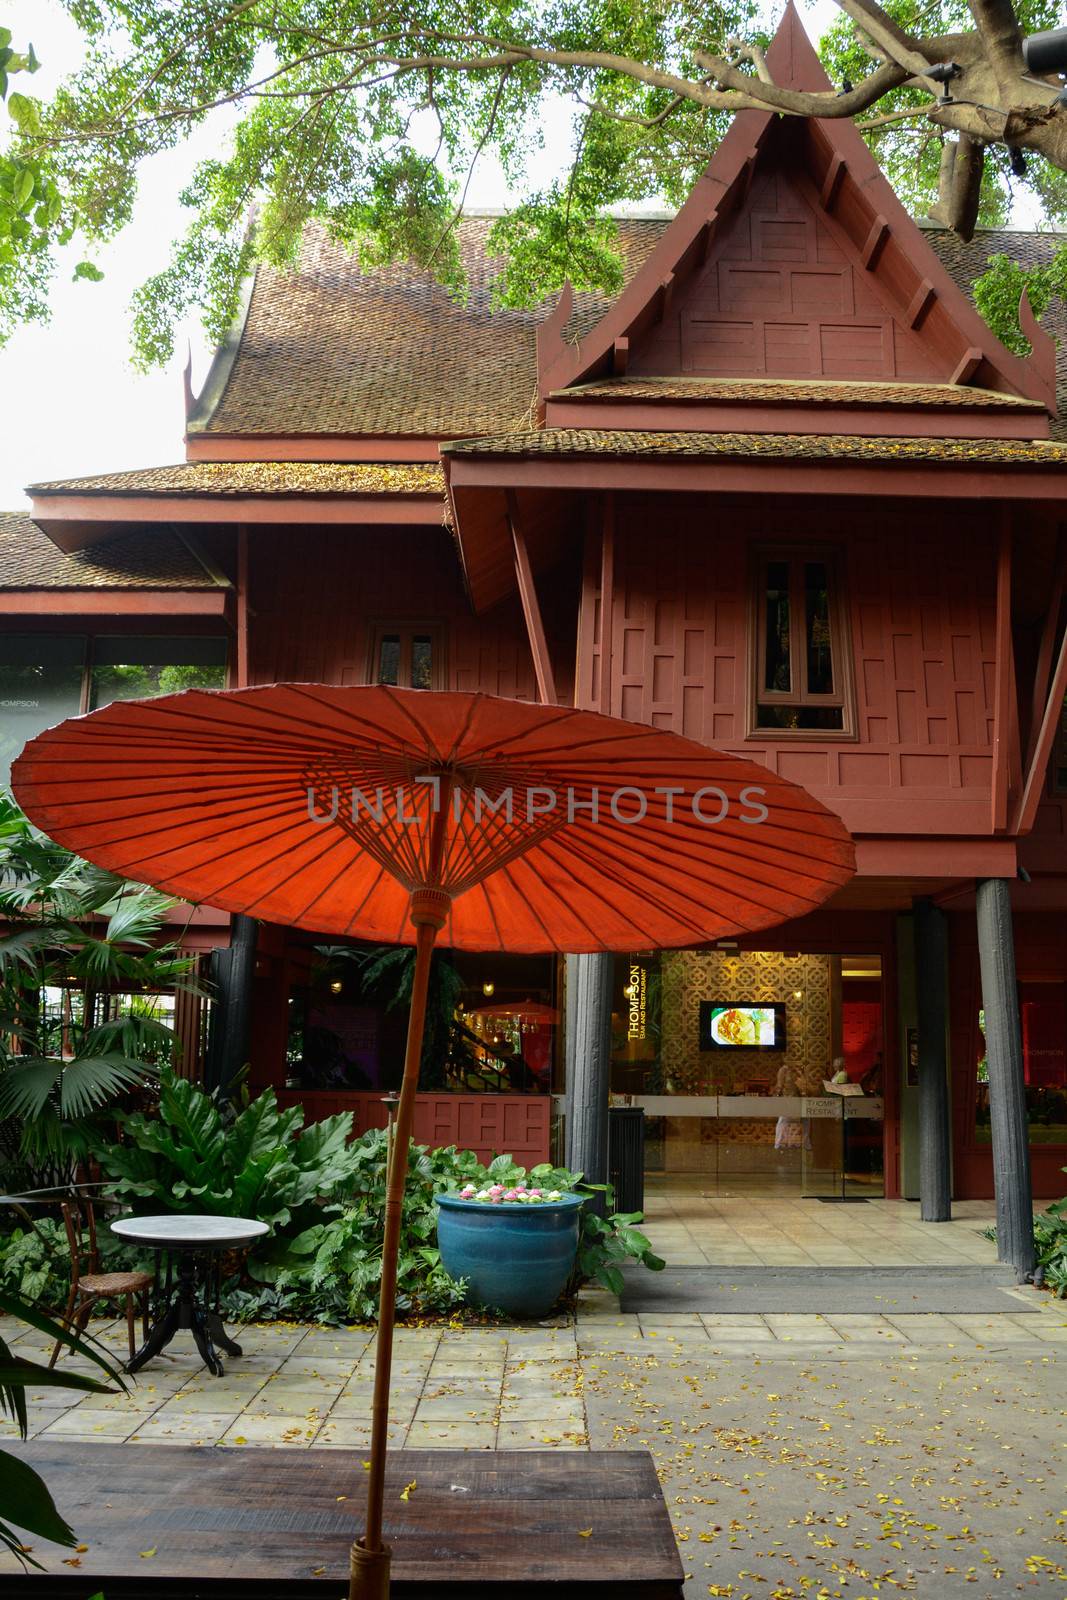 jim thompson house is thai house art style with orange Umbrella